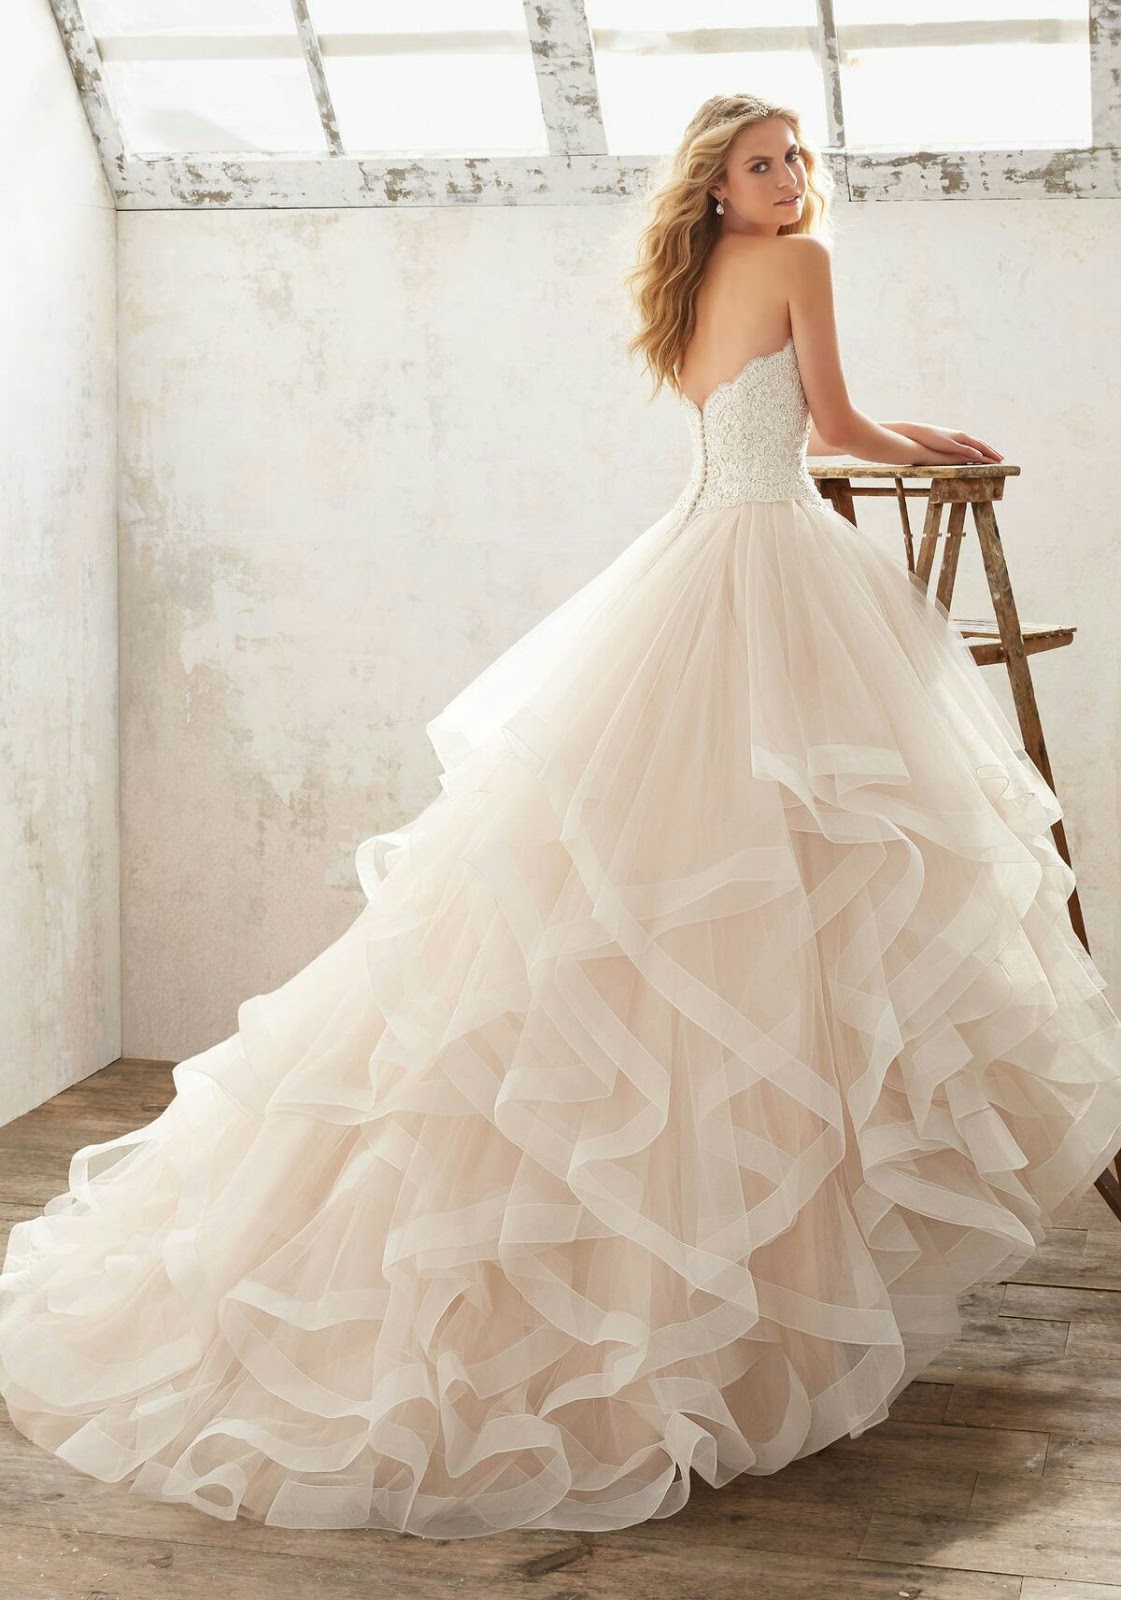 Fαshiση Gαlαxy 98 ☯: White Tulle Ball gown bridal dress